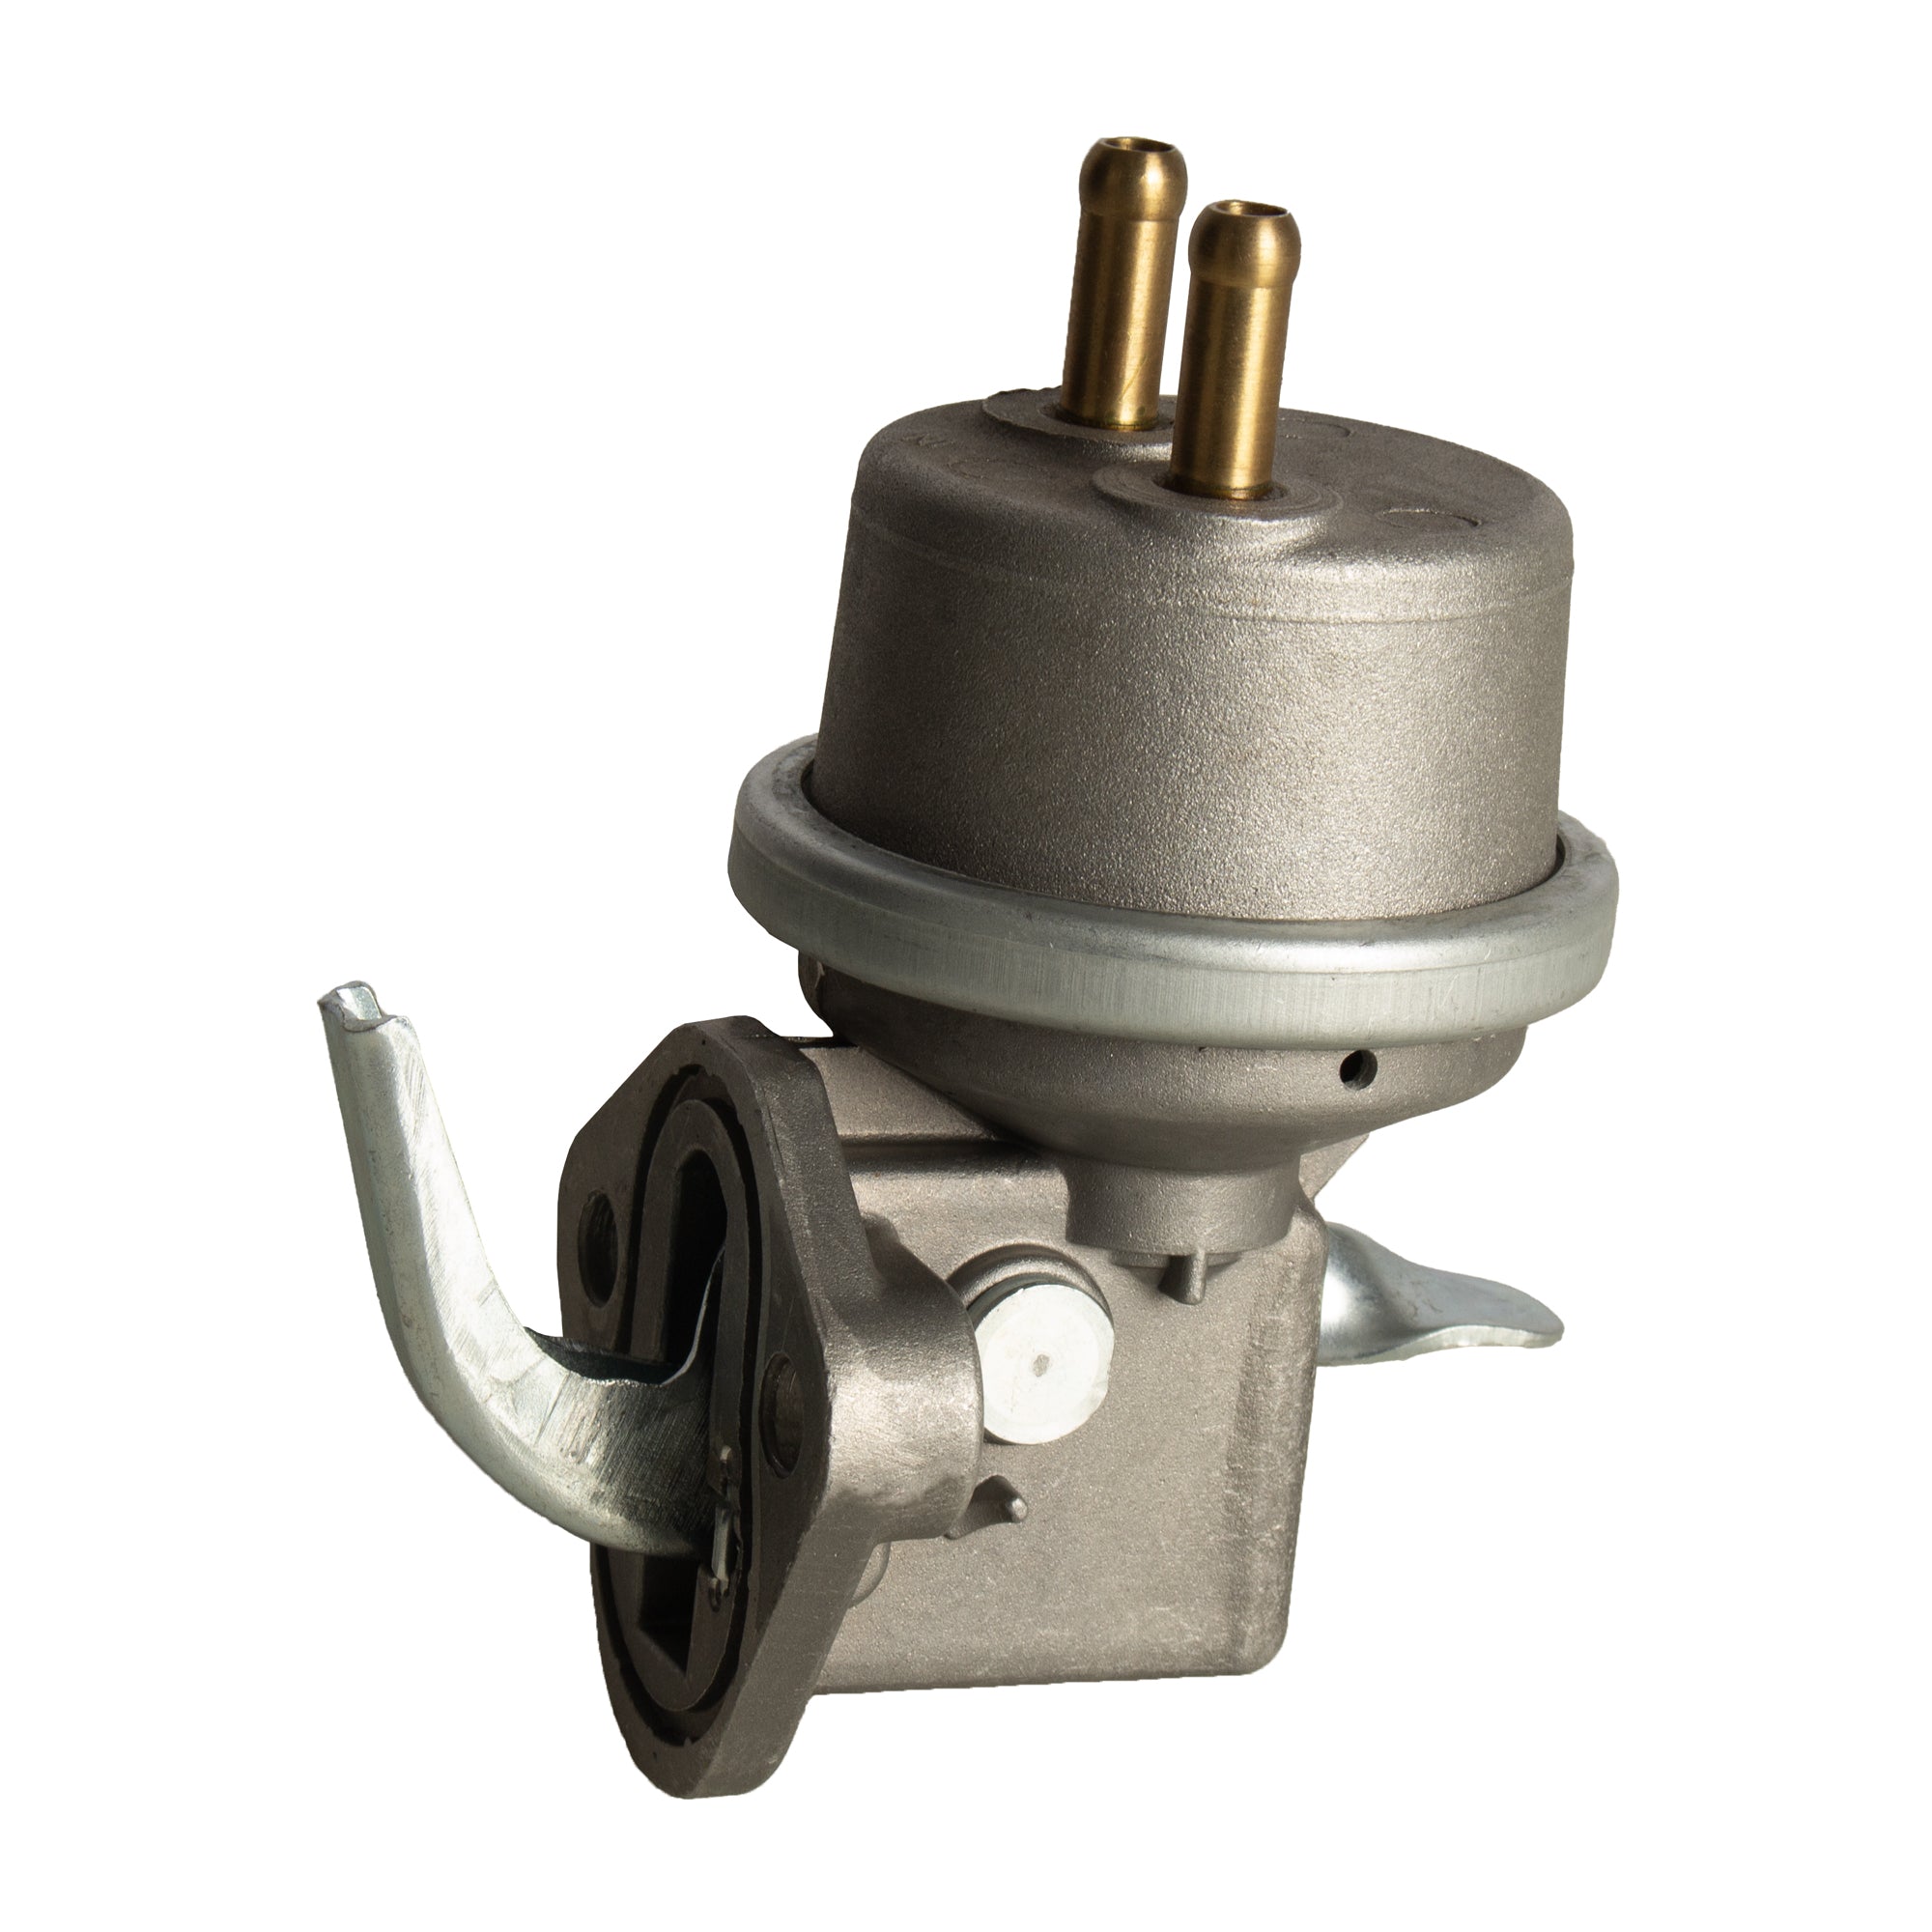 Fuel Pump Replacement for JOHN DEERE 4039 TF CD 4039 T 6068 HZ001 RE55390